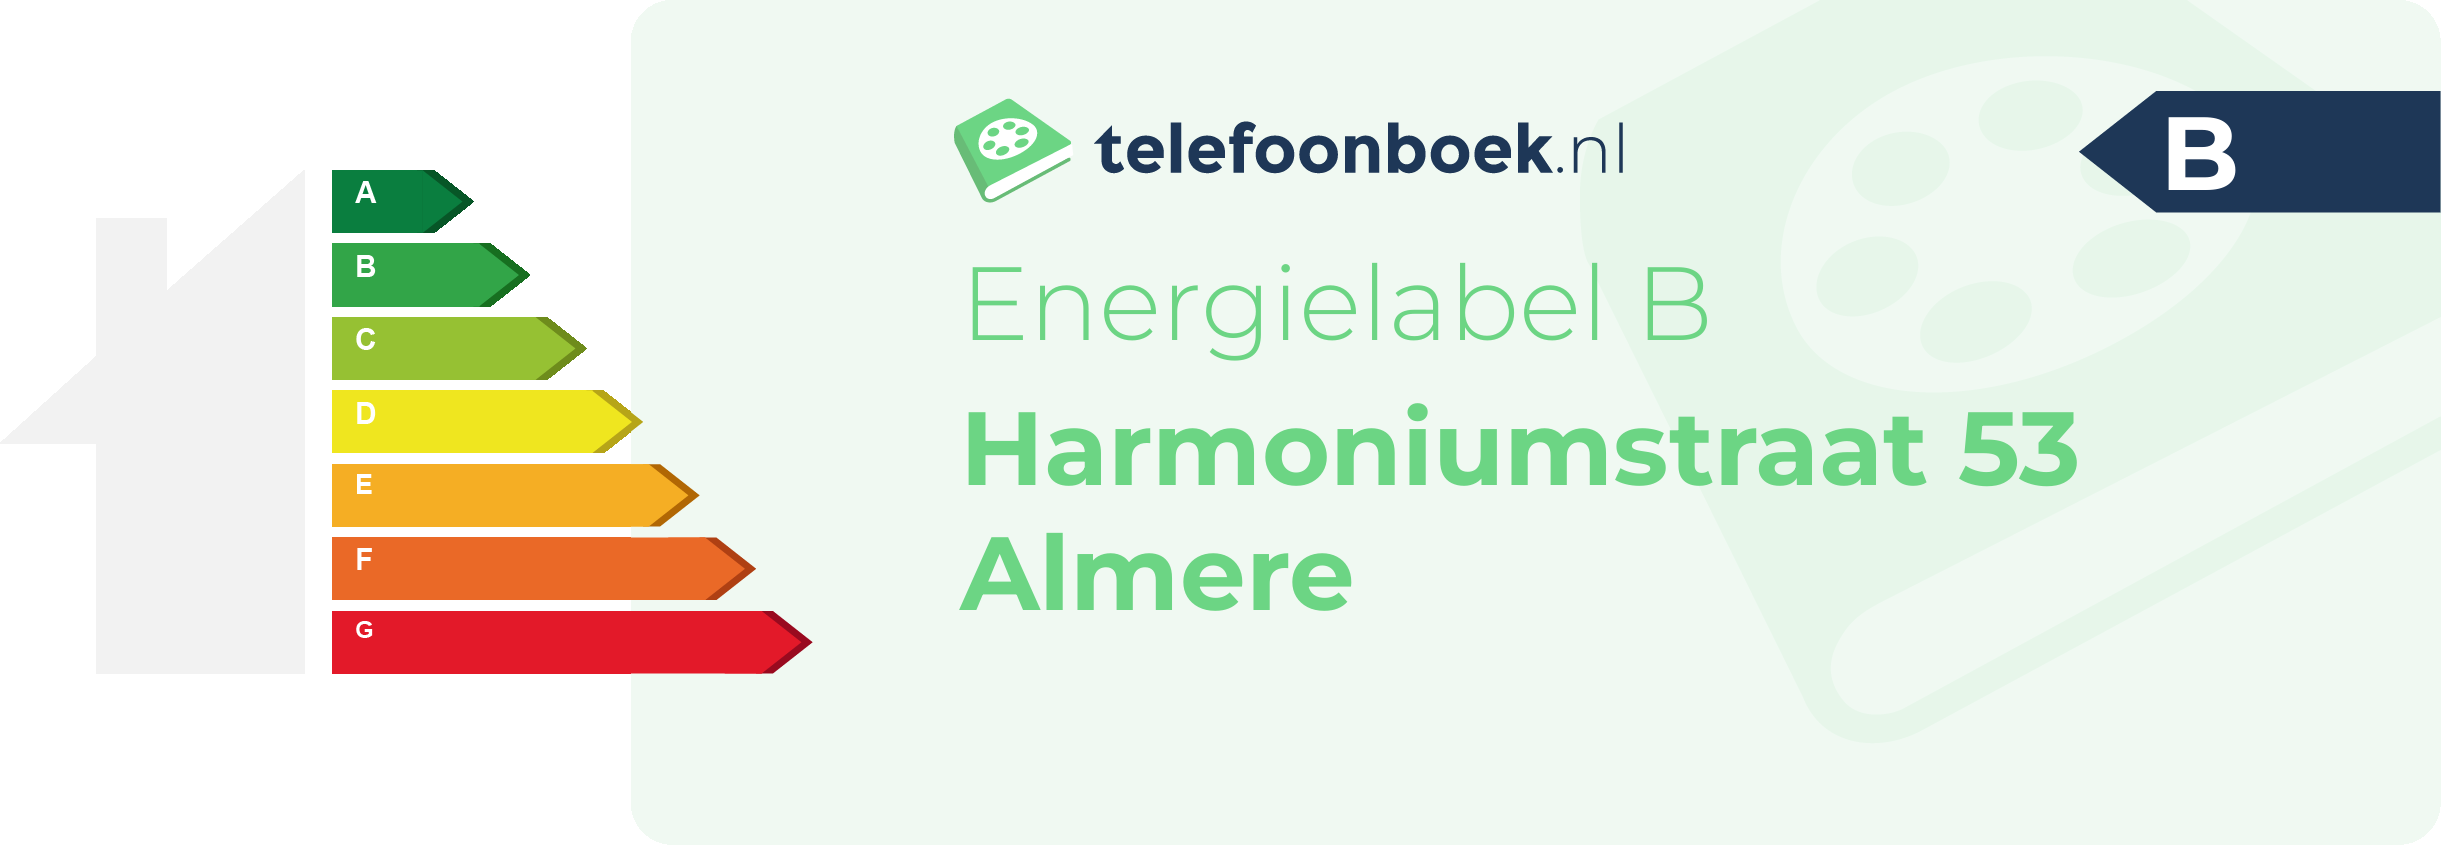 Energielabel Harmoniumstraat 53 Almere